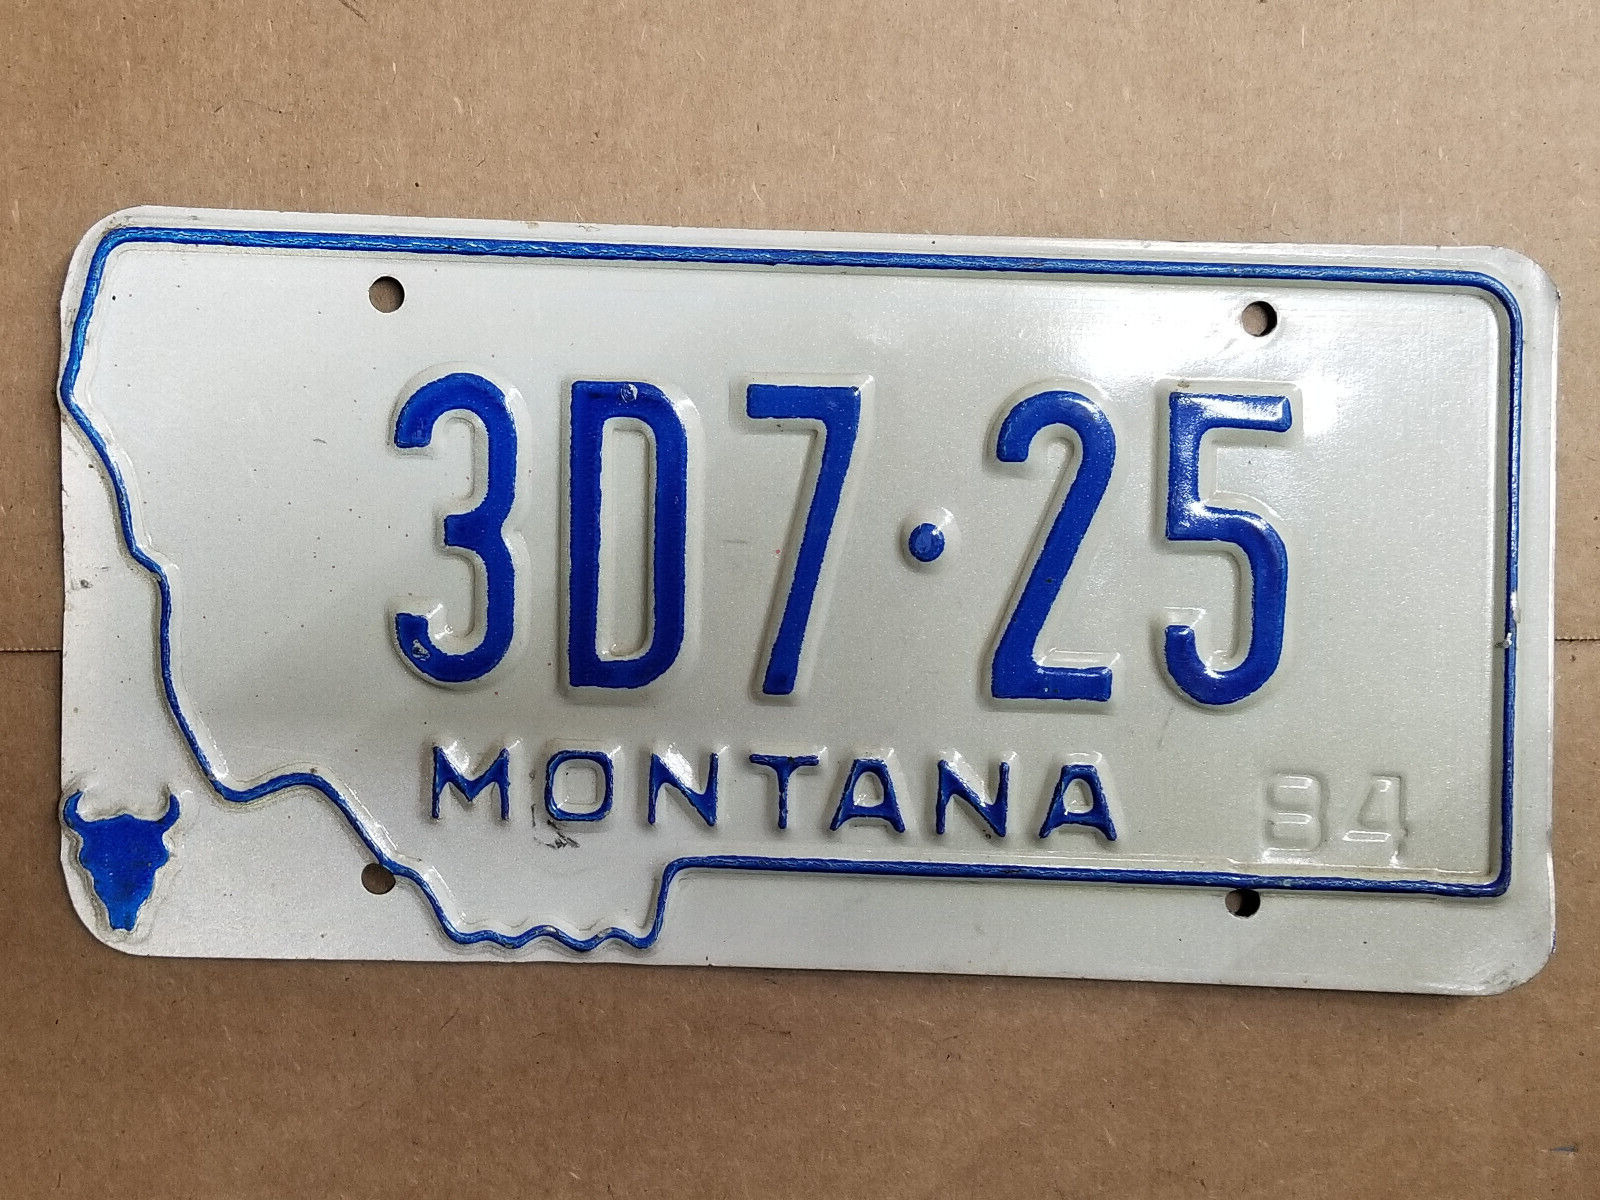 Montana License Plate 1984 Plate 3D7 25 Vintage Blue